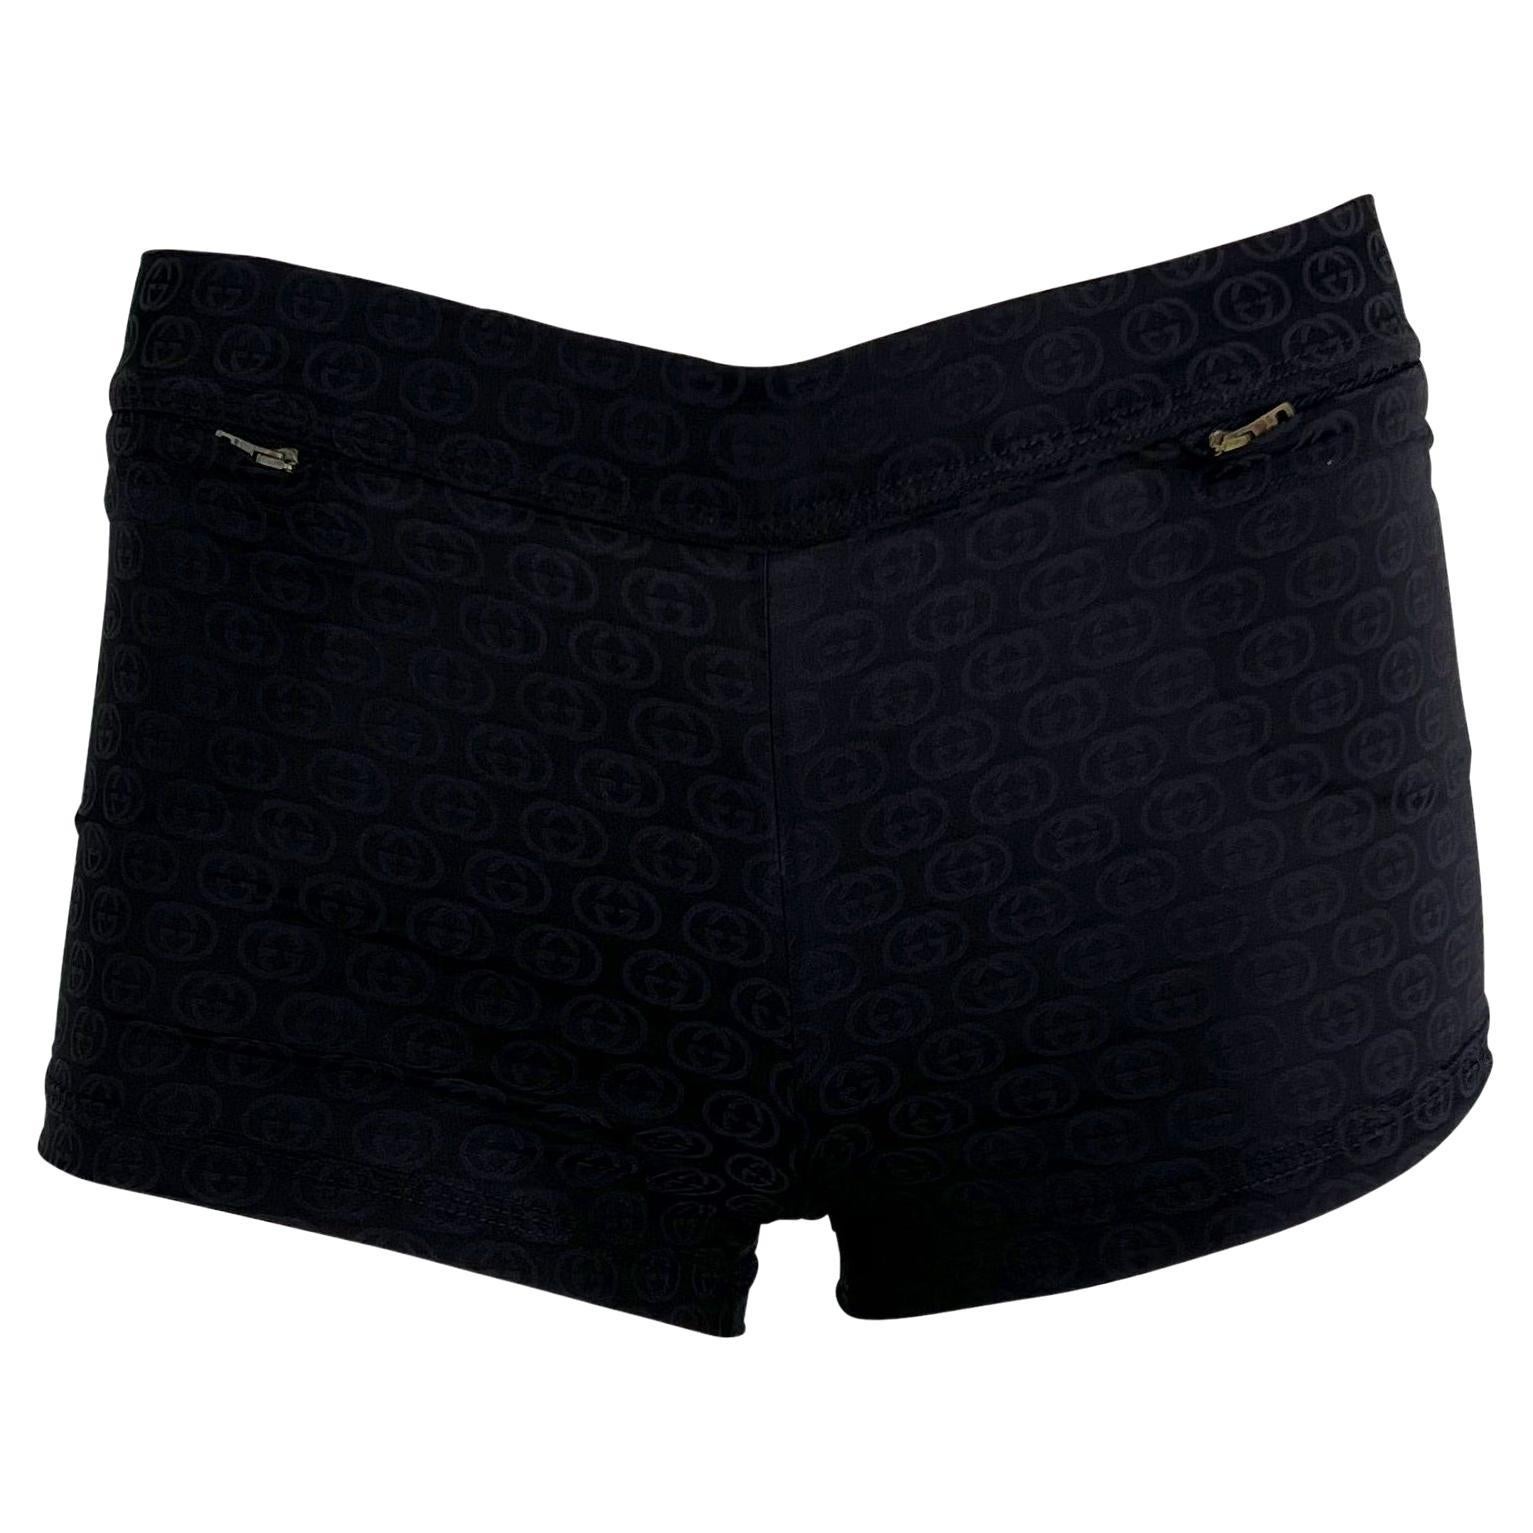 S/S 2003 Gucci by Tom Ford GG Monogram Stretch Swim Black Hot Pants Shorts Pour femmes en vente